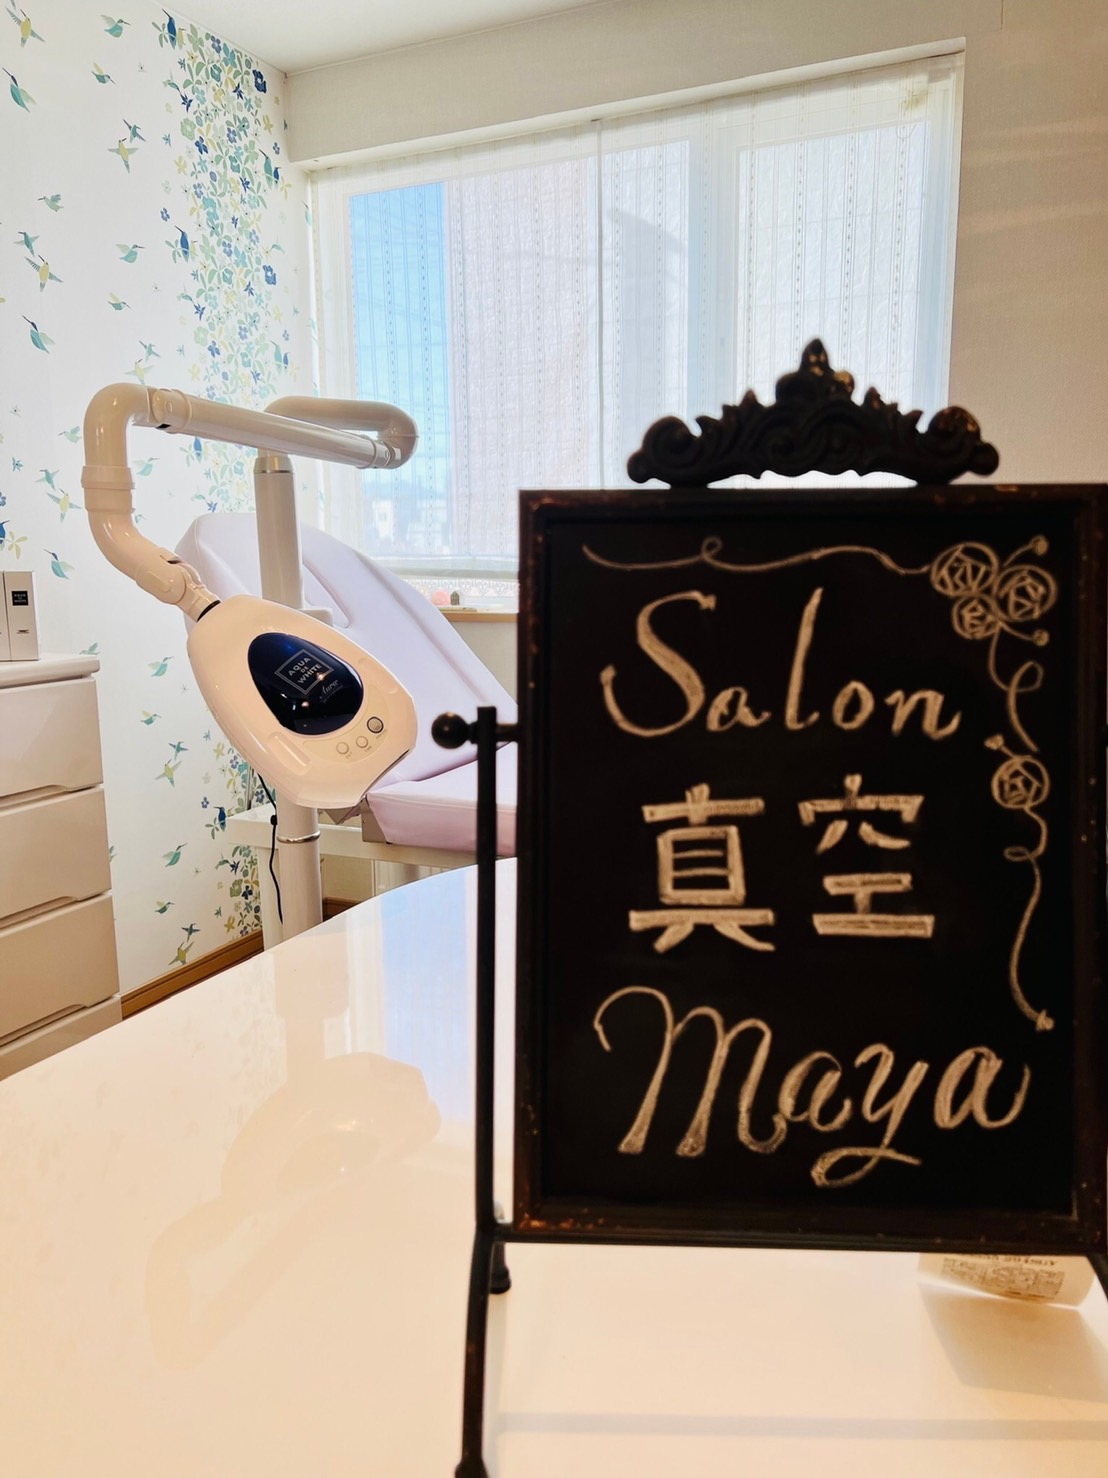 Salon真空～maya～self whitening